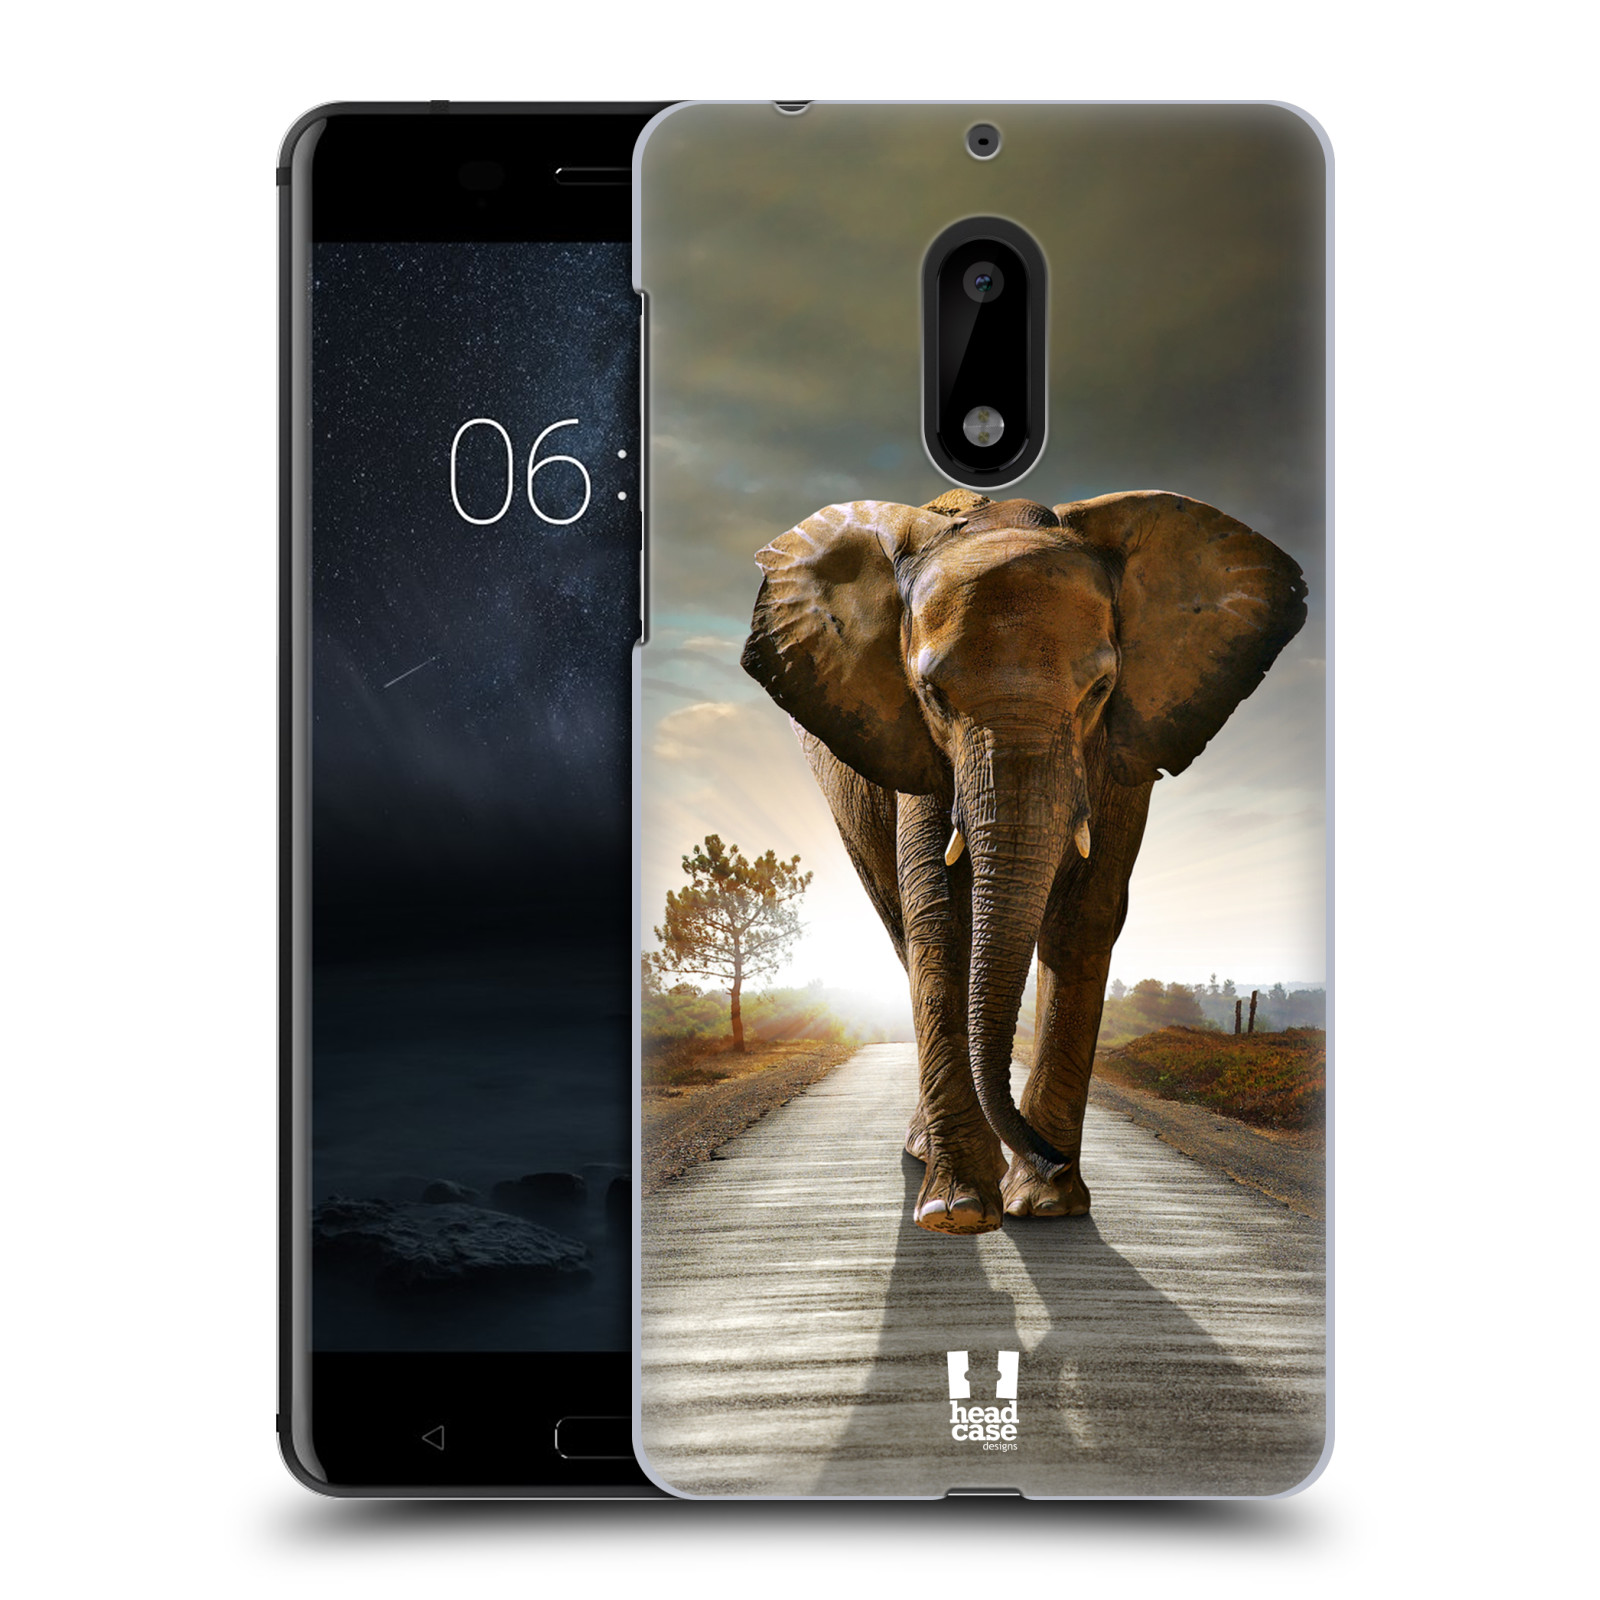 HEAD CASE plastový obal na mobil Nokia 6 vzor Divočina, Divoký život a zvířata foto AFRIKA KRÁČEJÍCI SLON